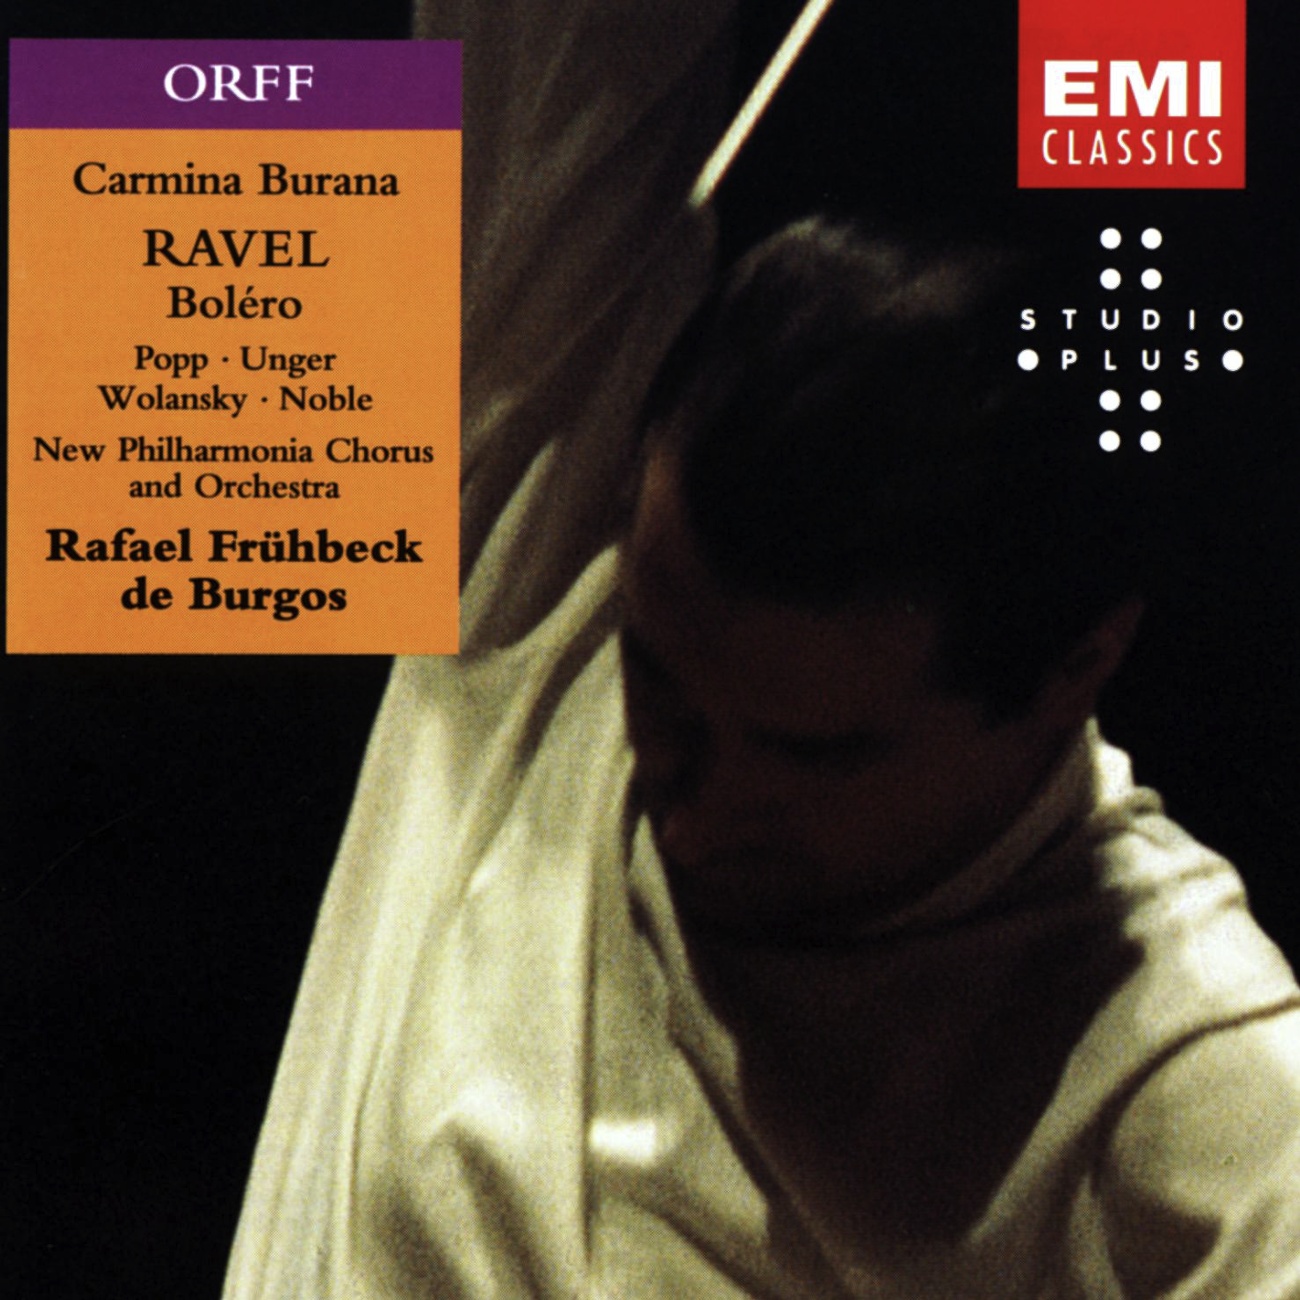 Orff: Carmina Burana Ravel: Bole ro